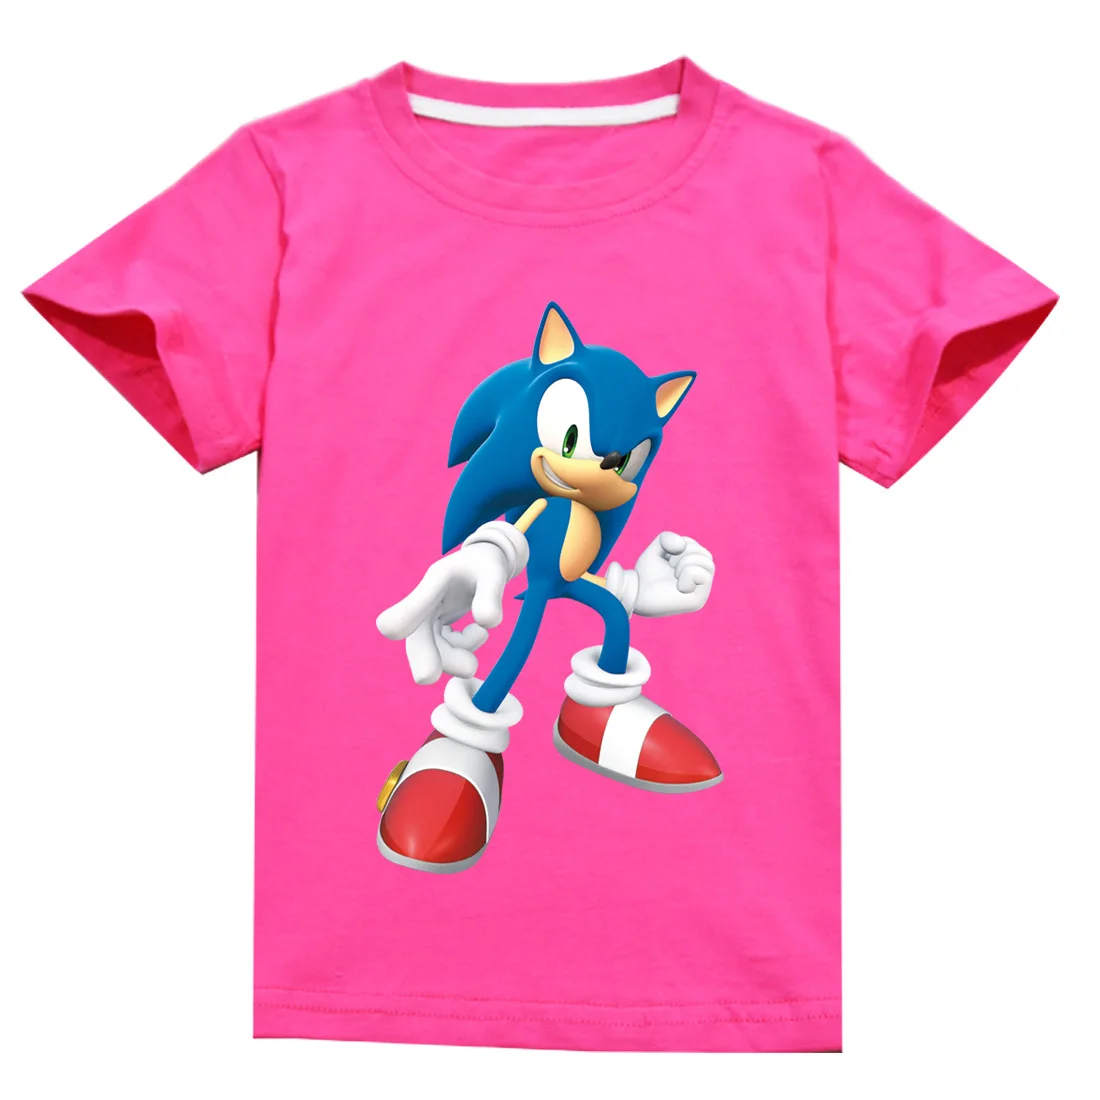 Camisa Temática Infantil Masculino Preto Sonic - Loja Online I